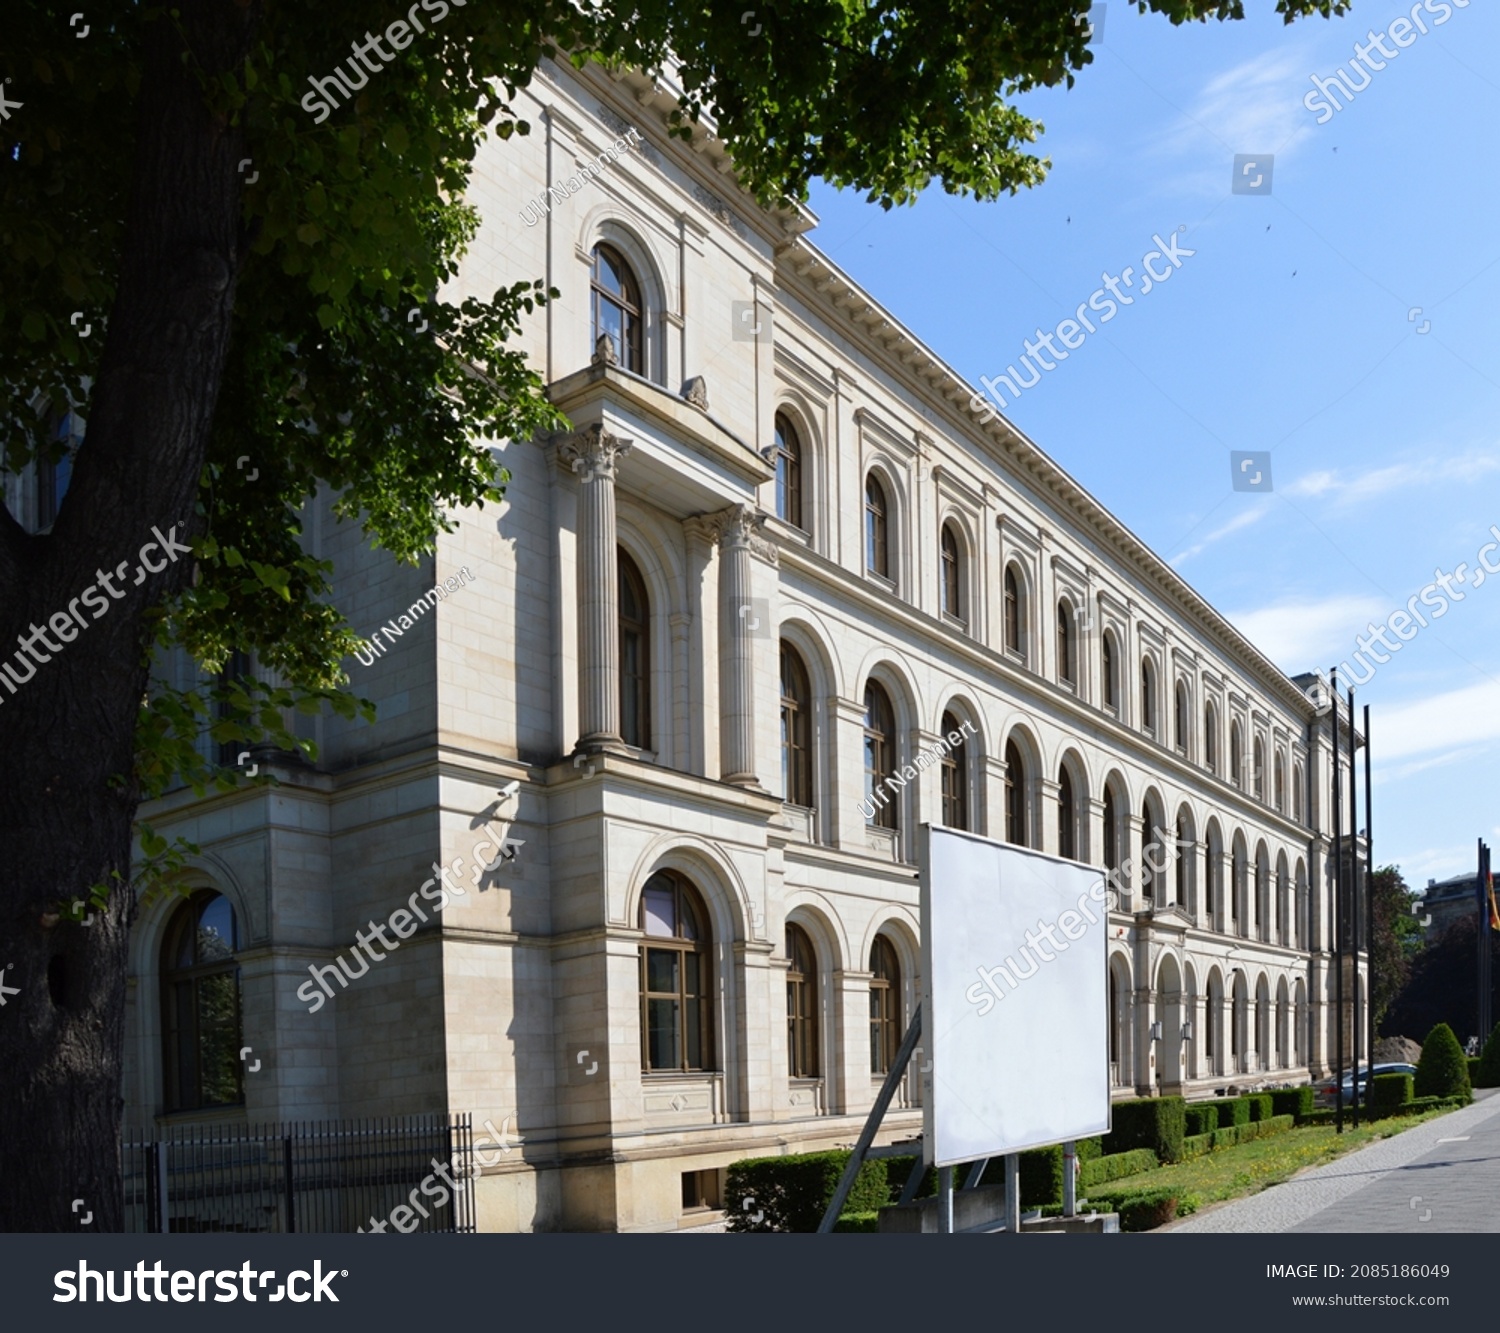 Historical Building in the Neighborhood Mitte, Berlin #2085186049